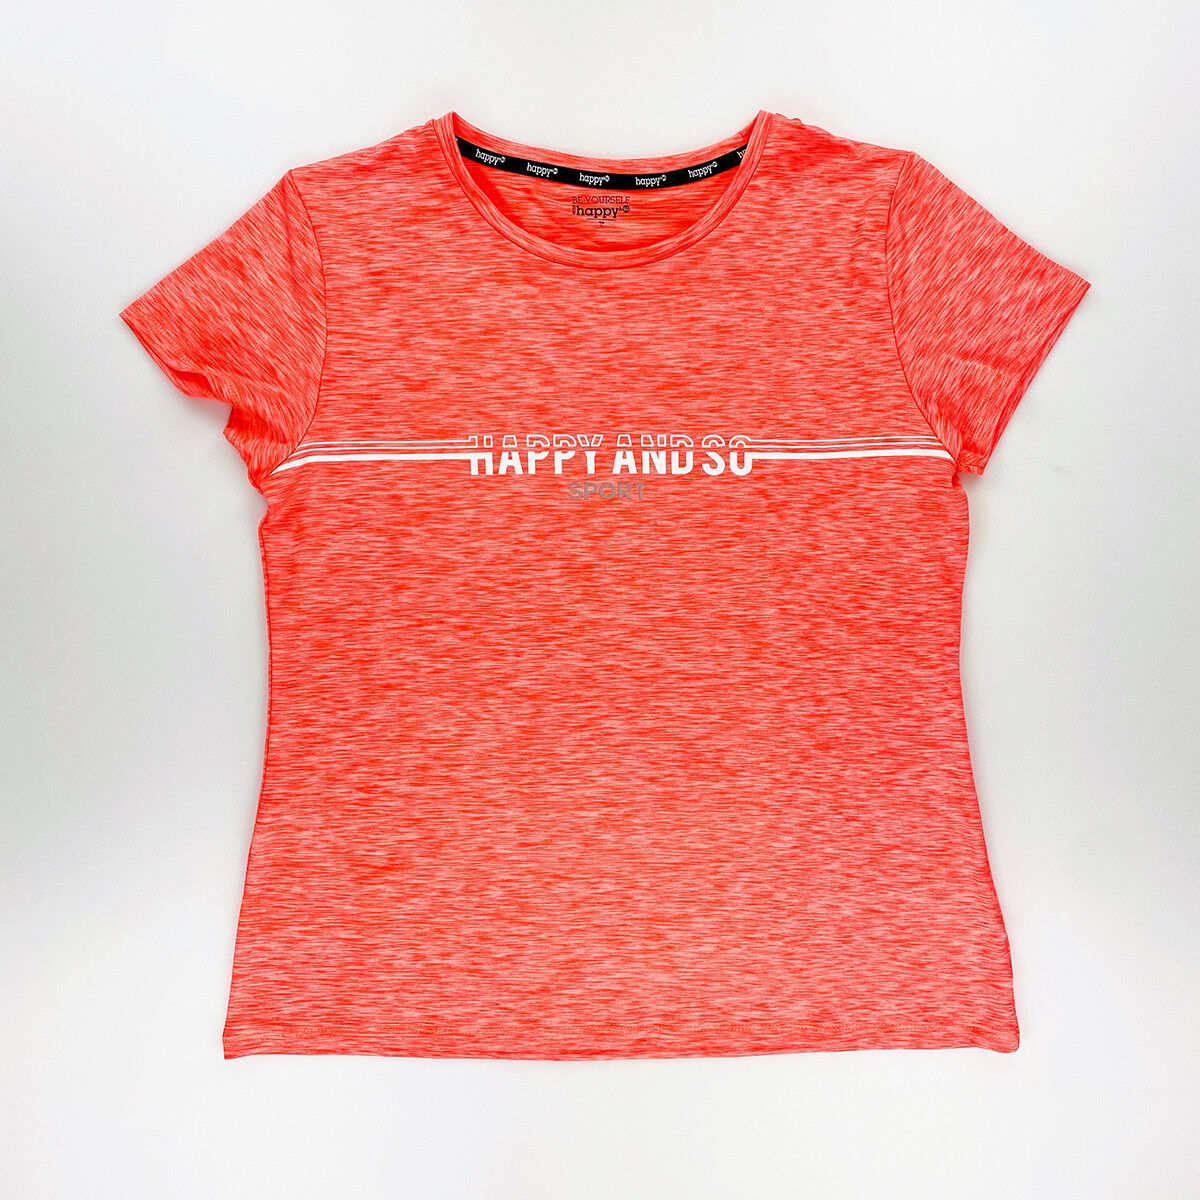 Happy & So Chine Graphic - T-shirt di seconda mano - Donna - Rosa - L | Hardloop